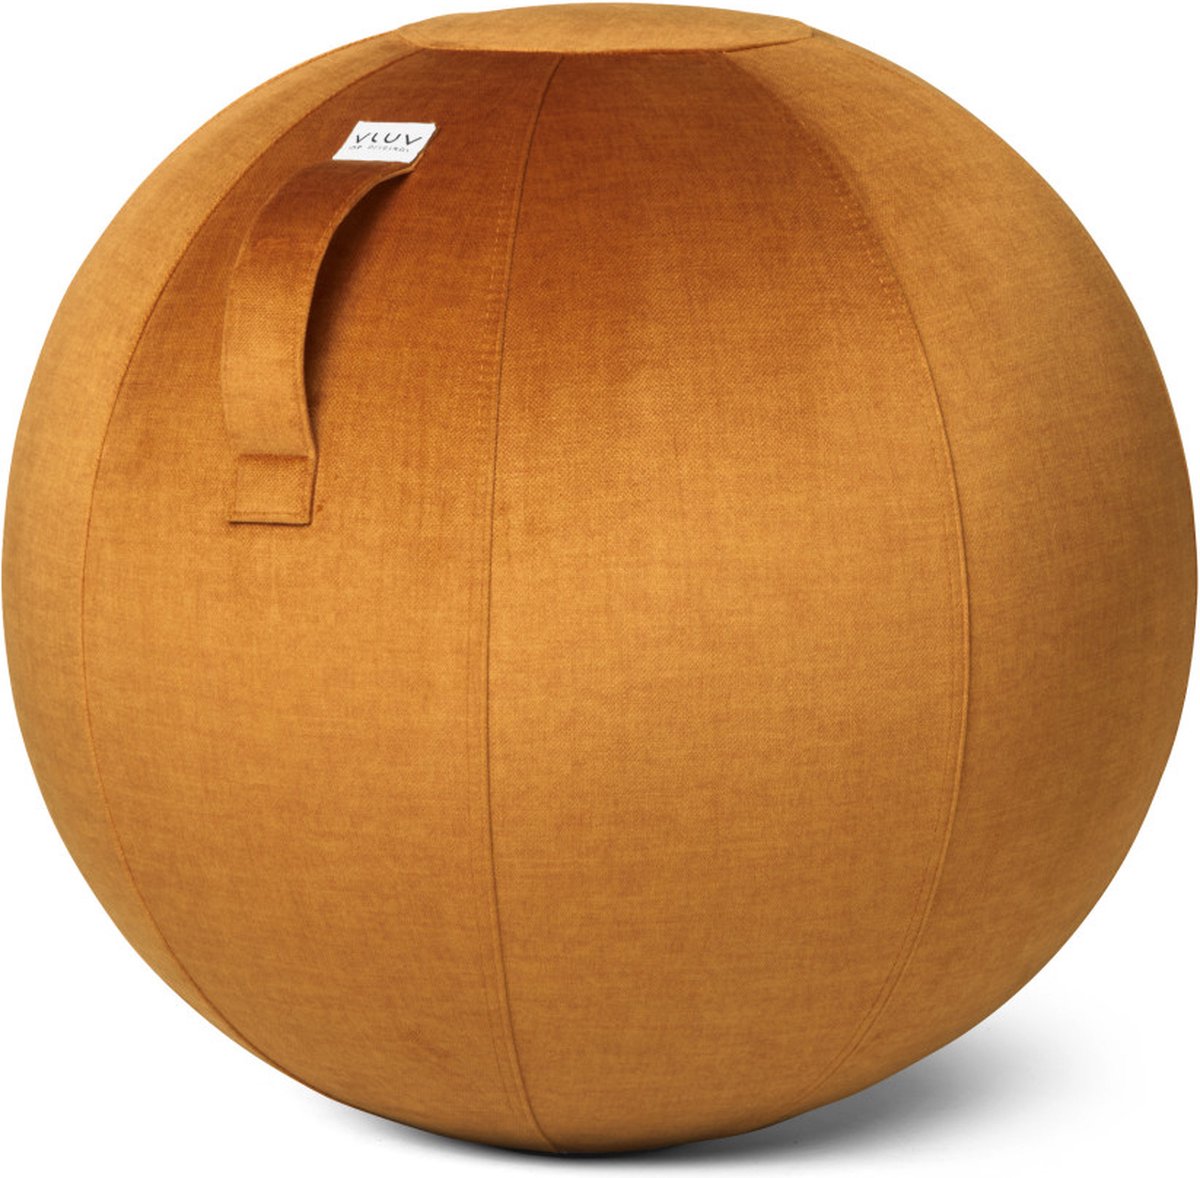 Vluv BOL VARM zitbal - 65cm - Pumpkin - Oranje